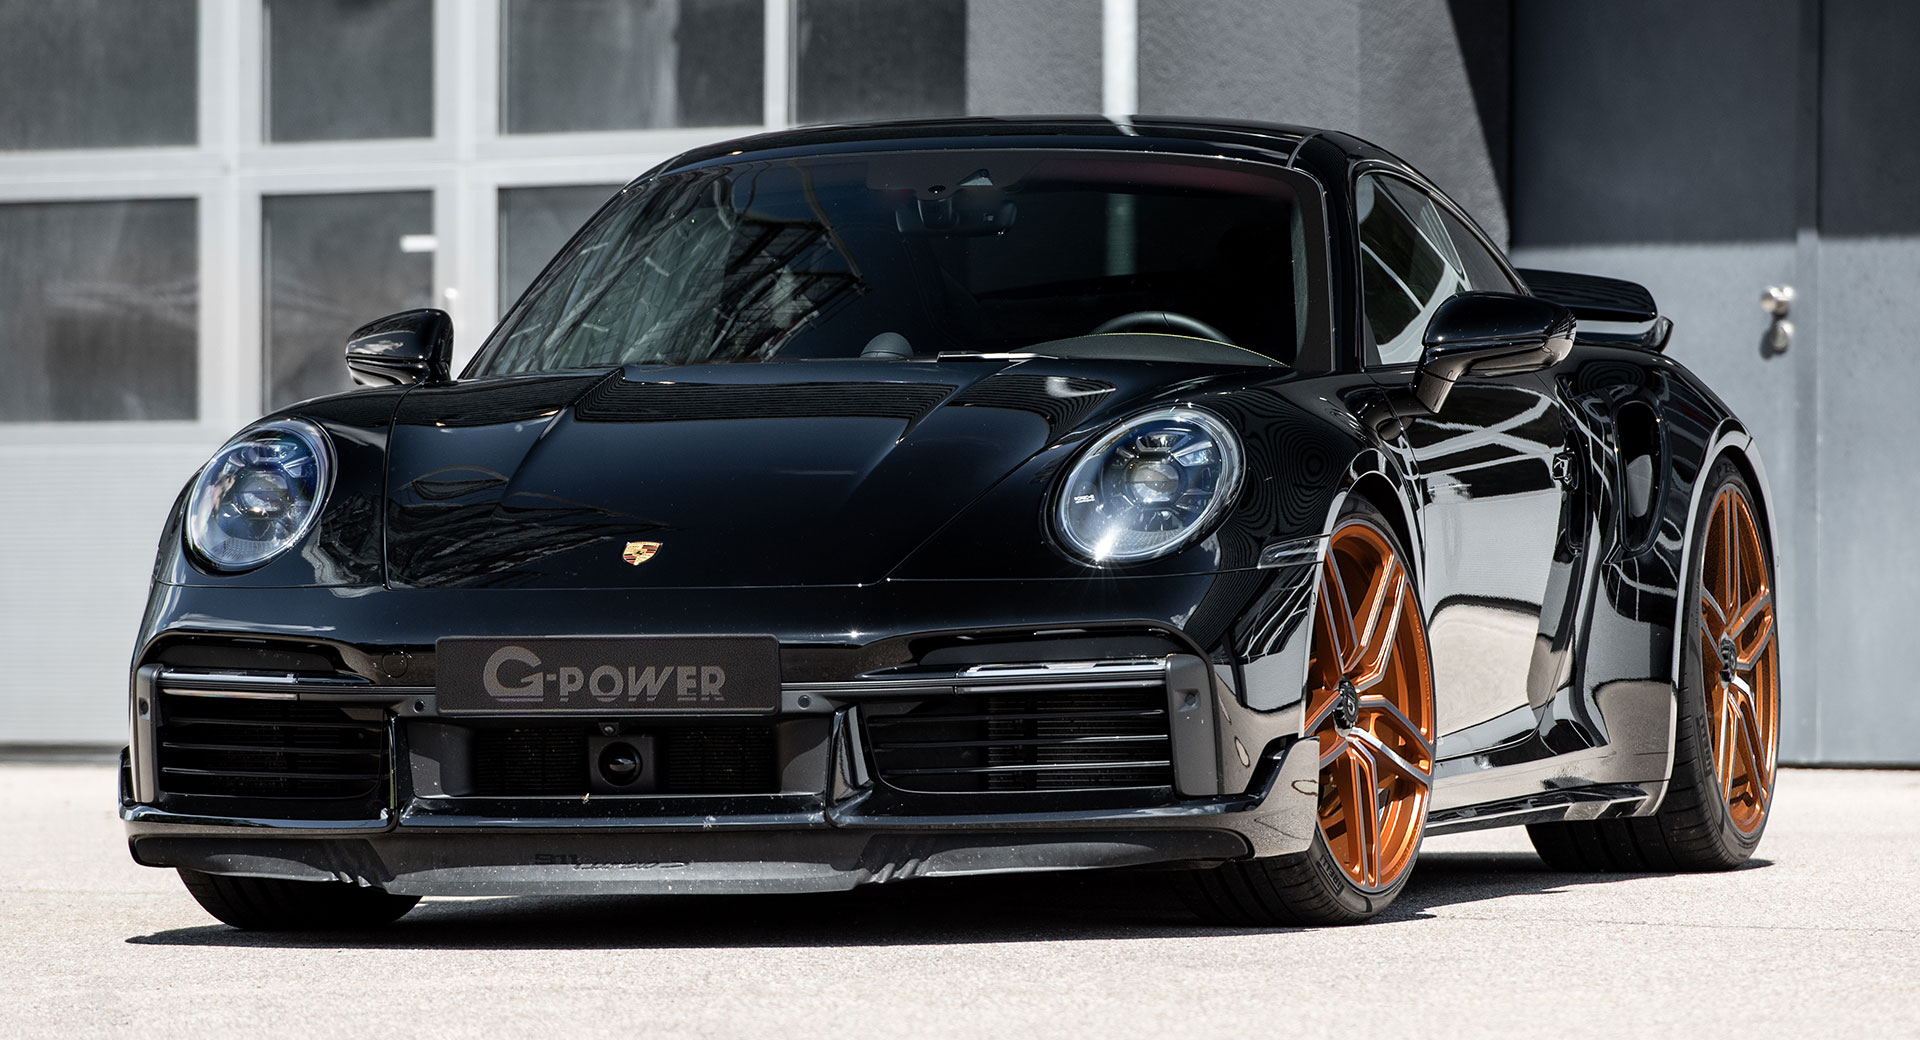 https://www.carscoops.com/wp-content/uploads/2022/08/G-Power-Porsche-911-Turbo-S-1b.jpg